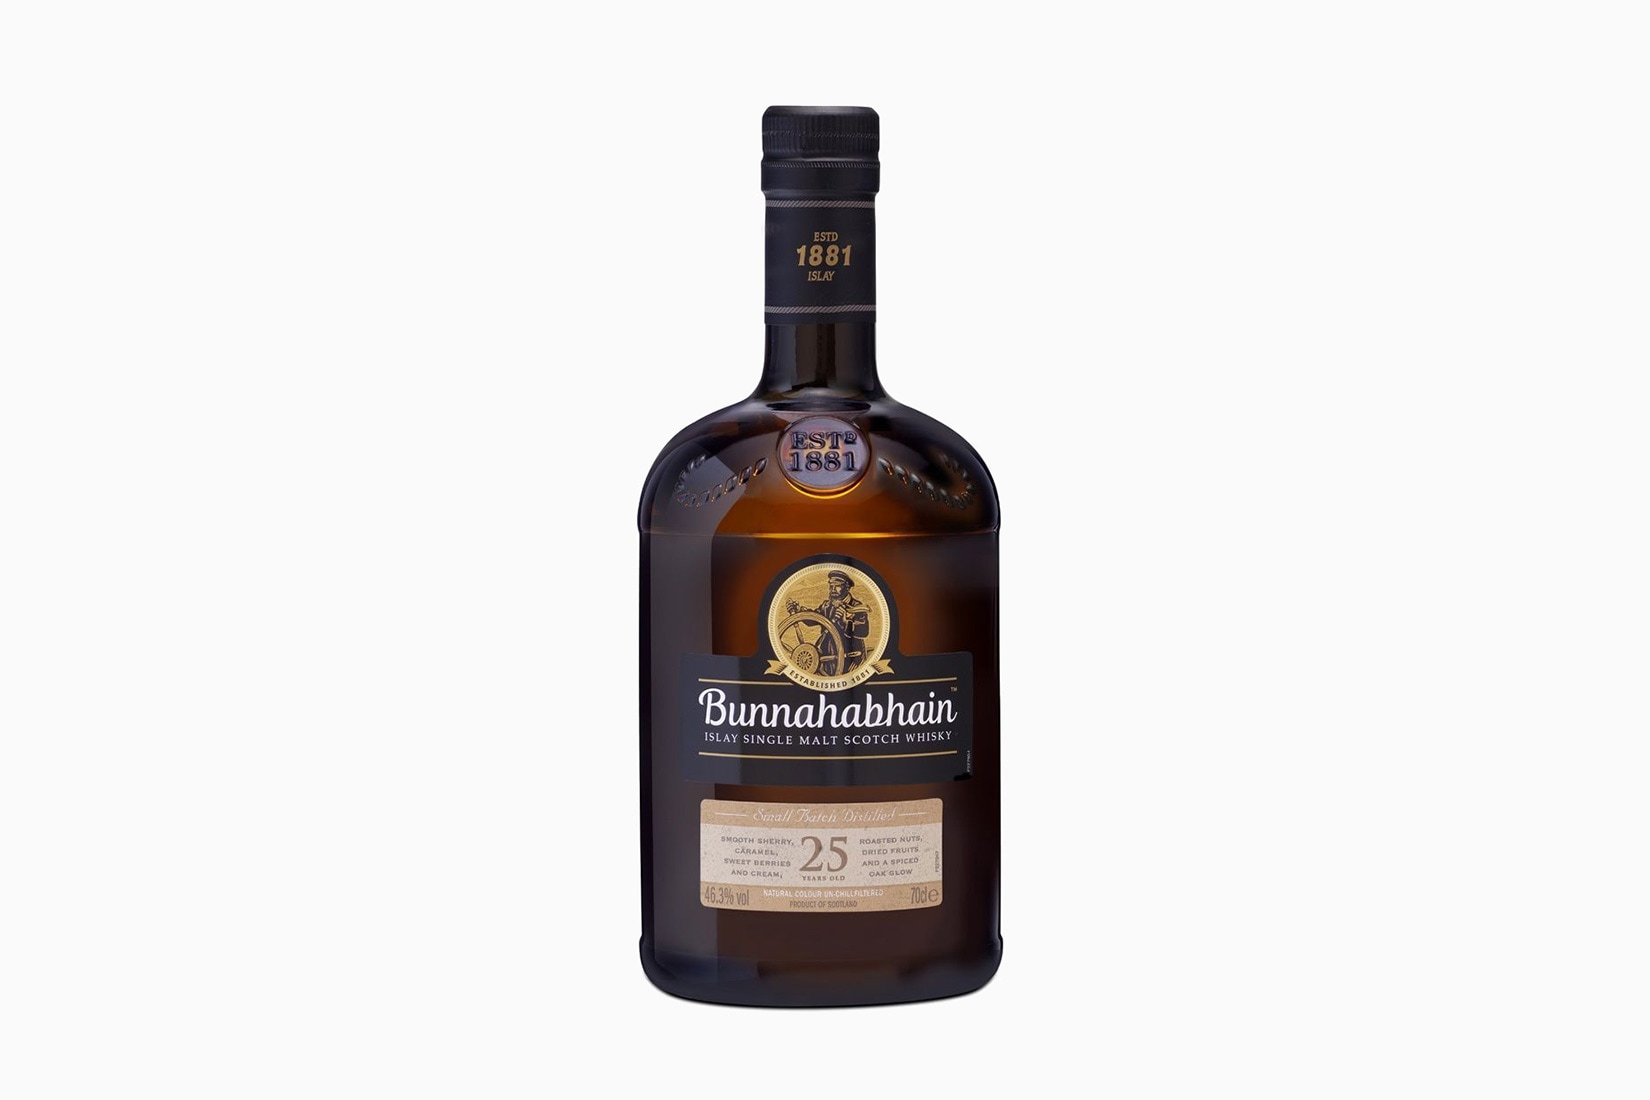 meilleures marques de whisky bunnahabhain haut de gamme - Luxe Digital